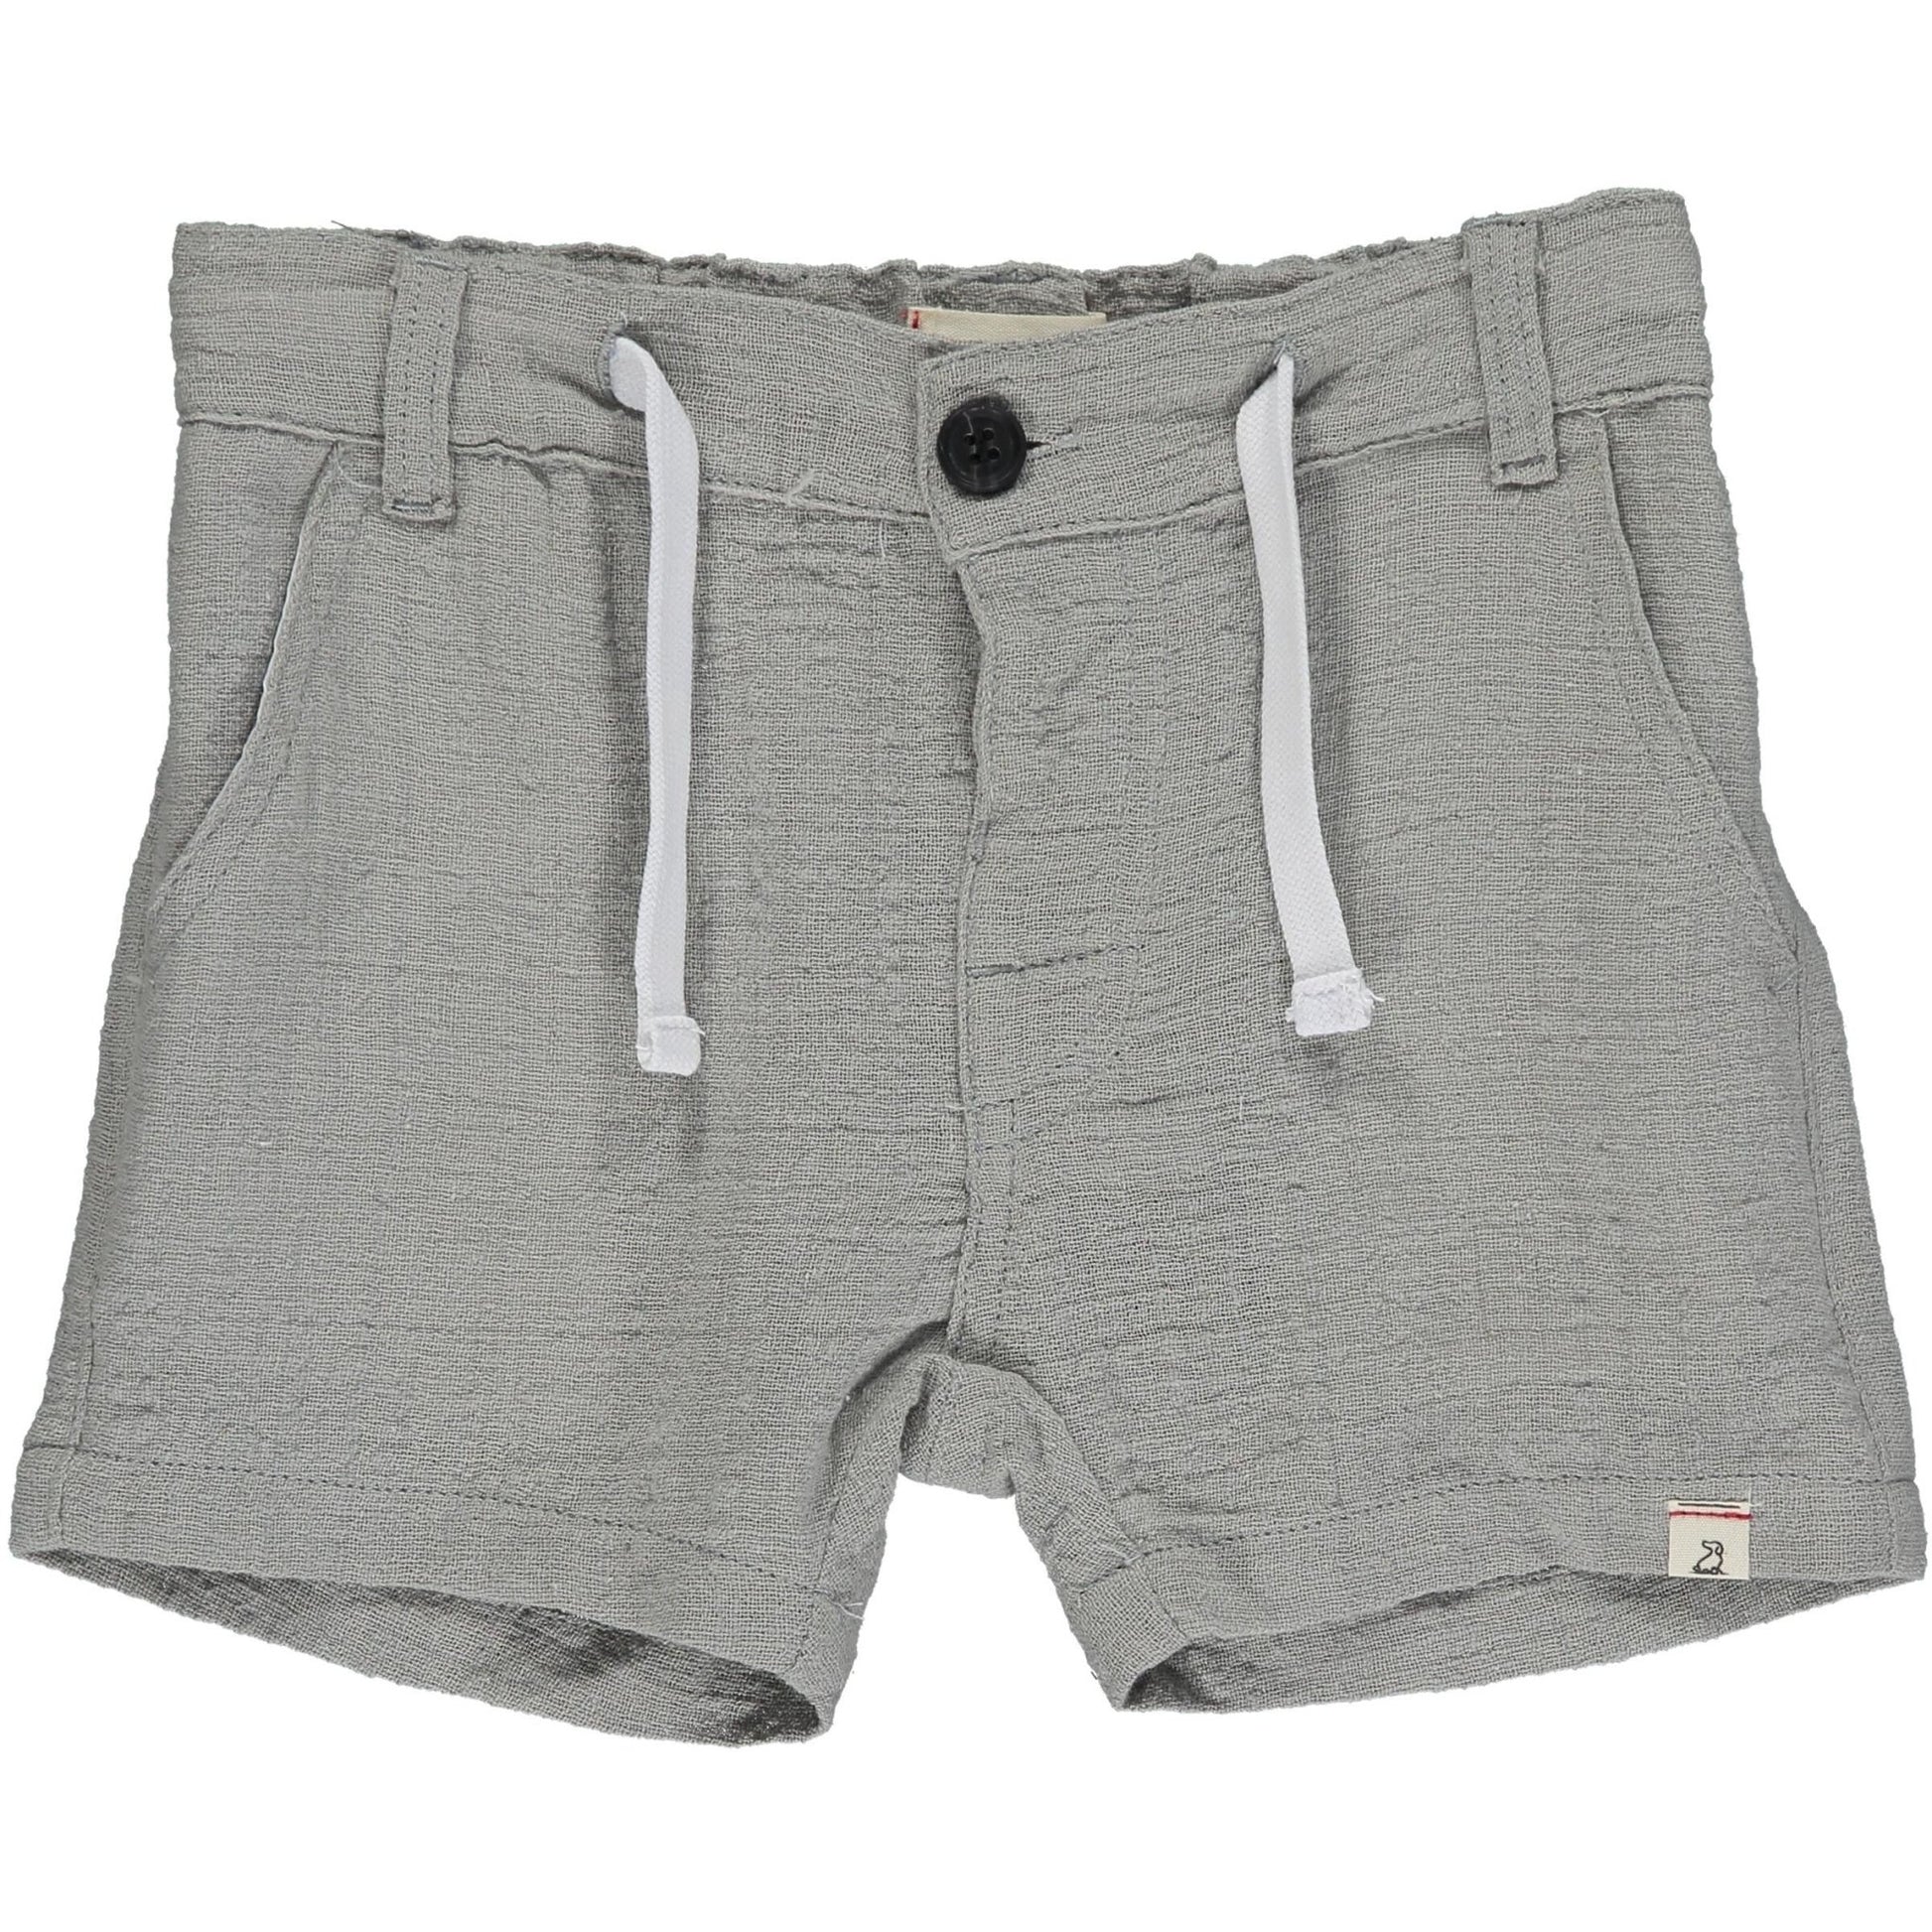 CREW grey cotton gauze shorts - Nico